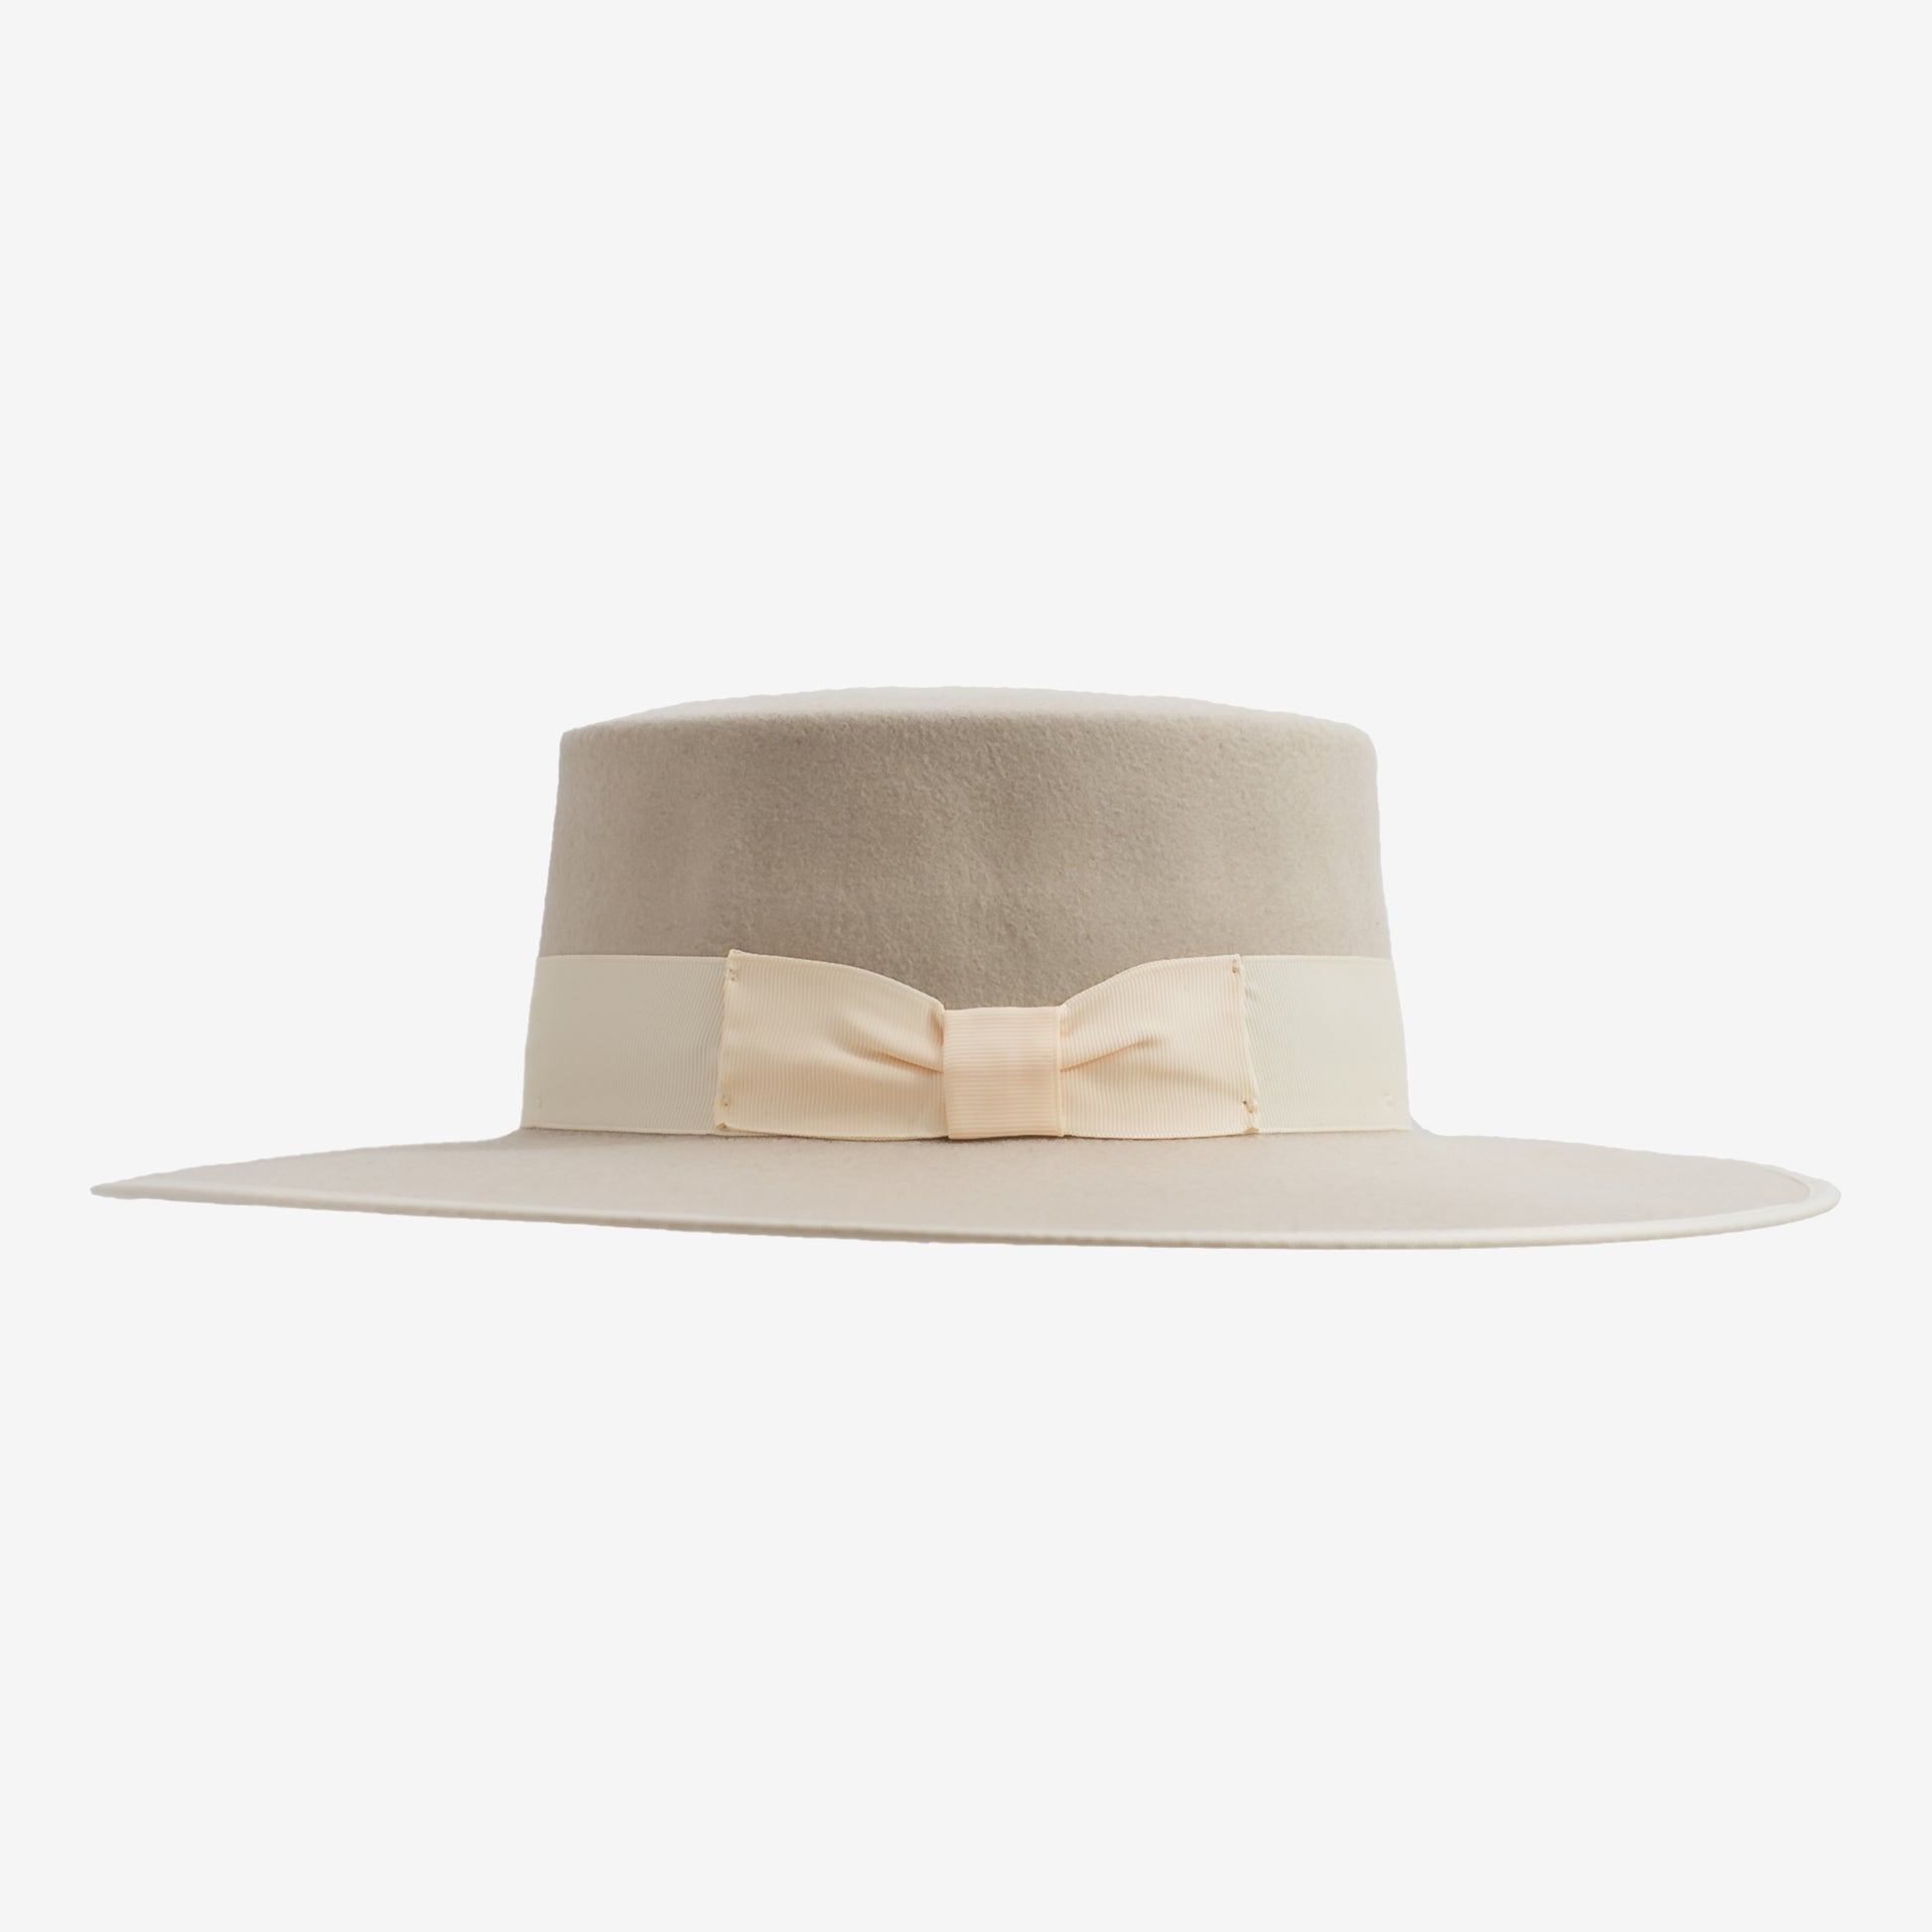 mindo-hats-claudia-cordobes-wool-hat-cream-side